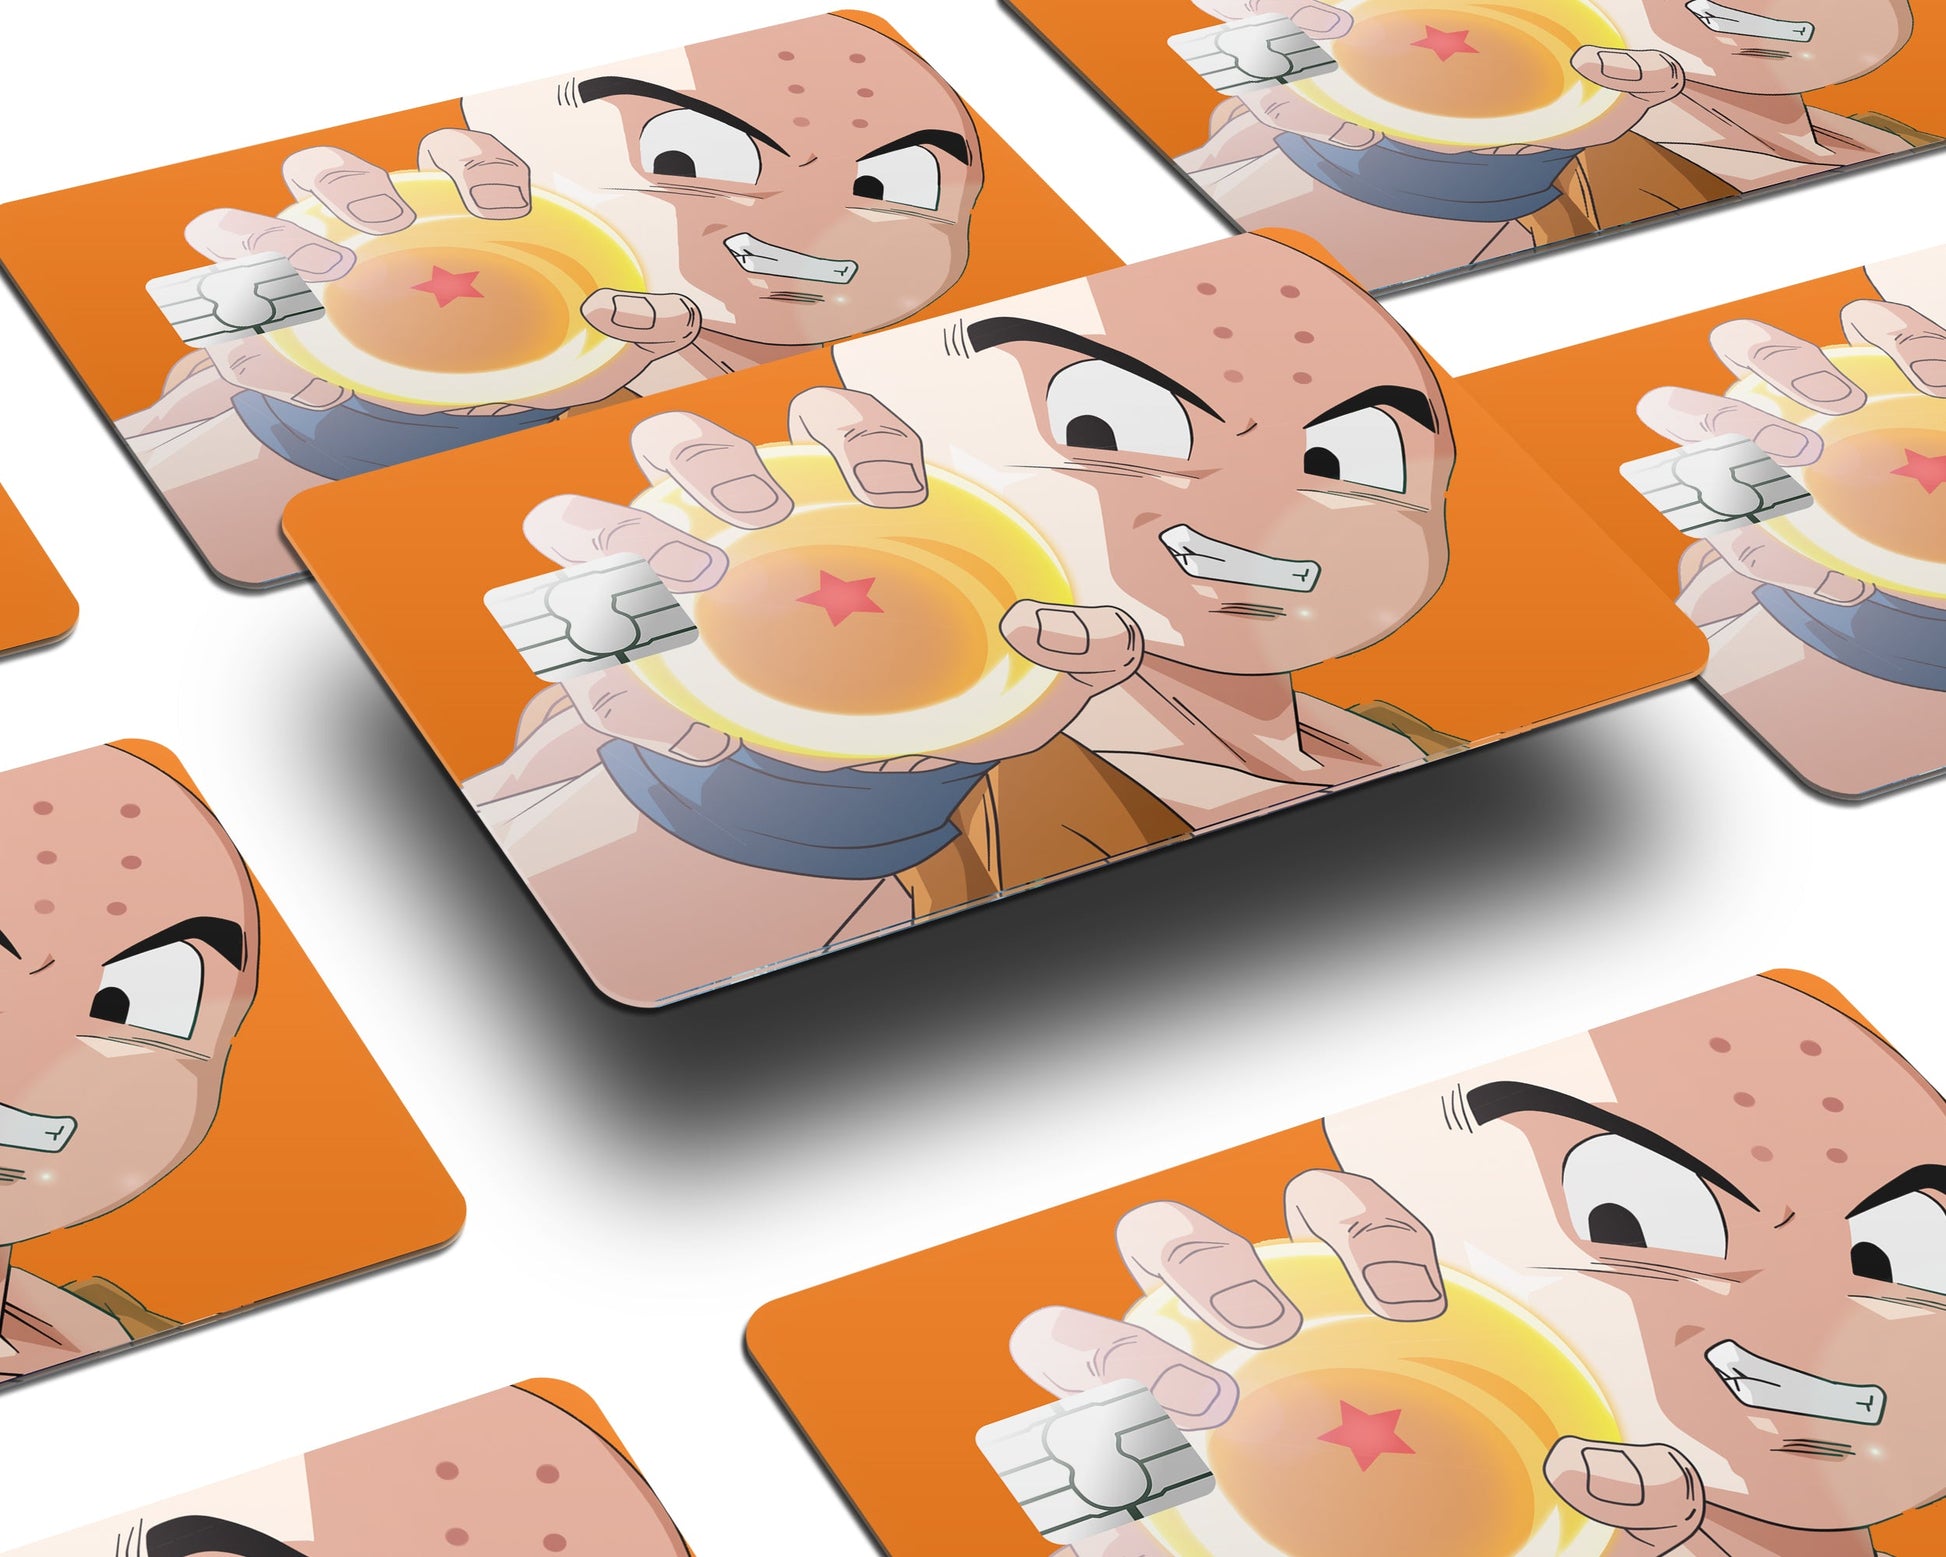 Anime Town Creations Credit Card Dragon Ball Krillin Half Skins - Anime Dragon Ball Credit Card Skin